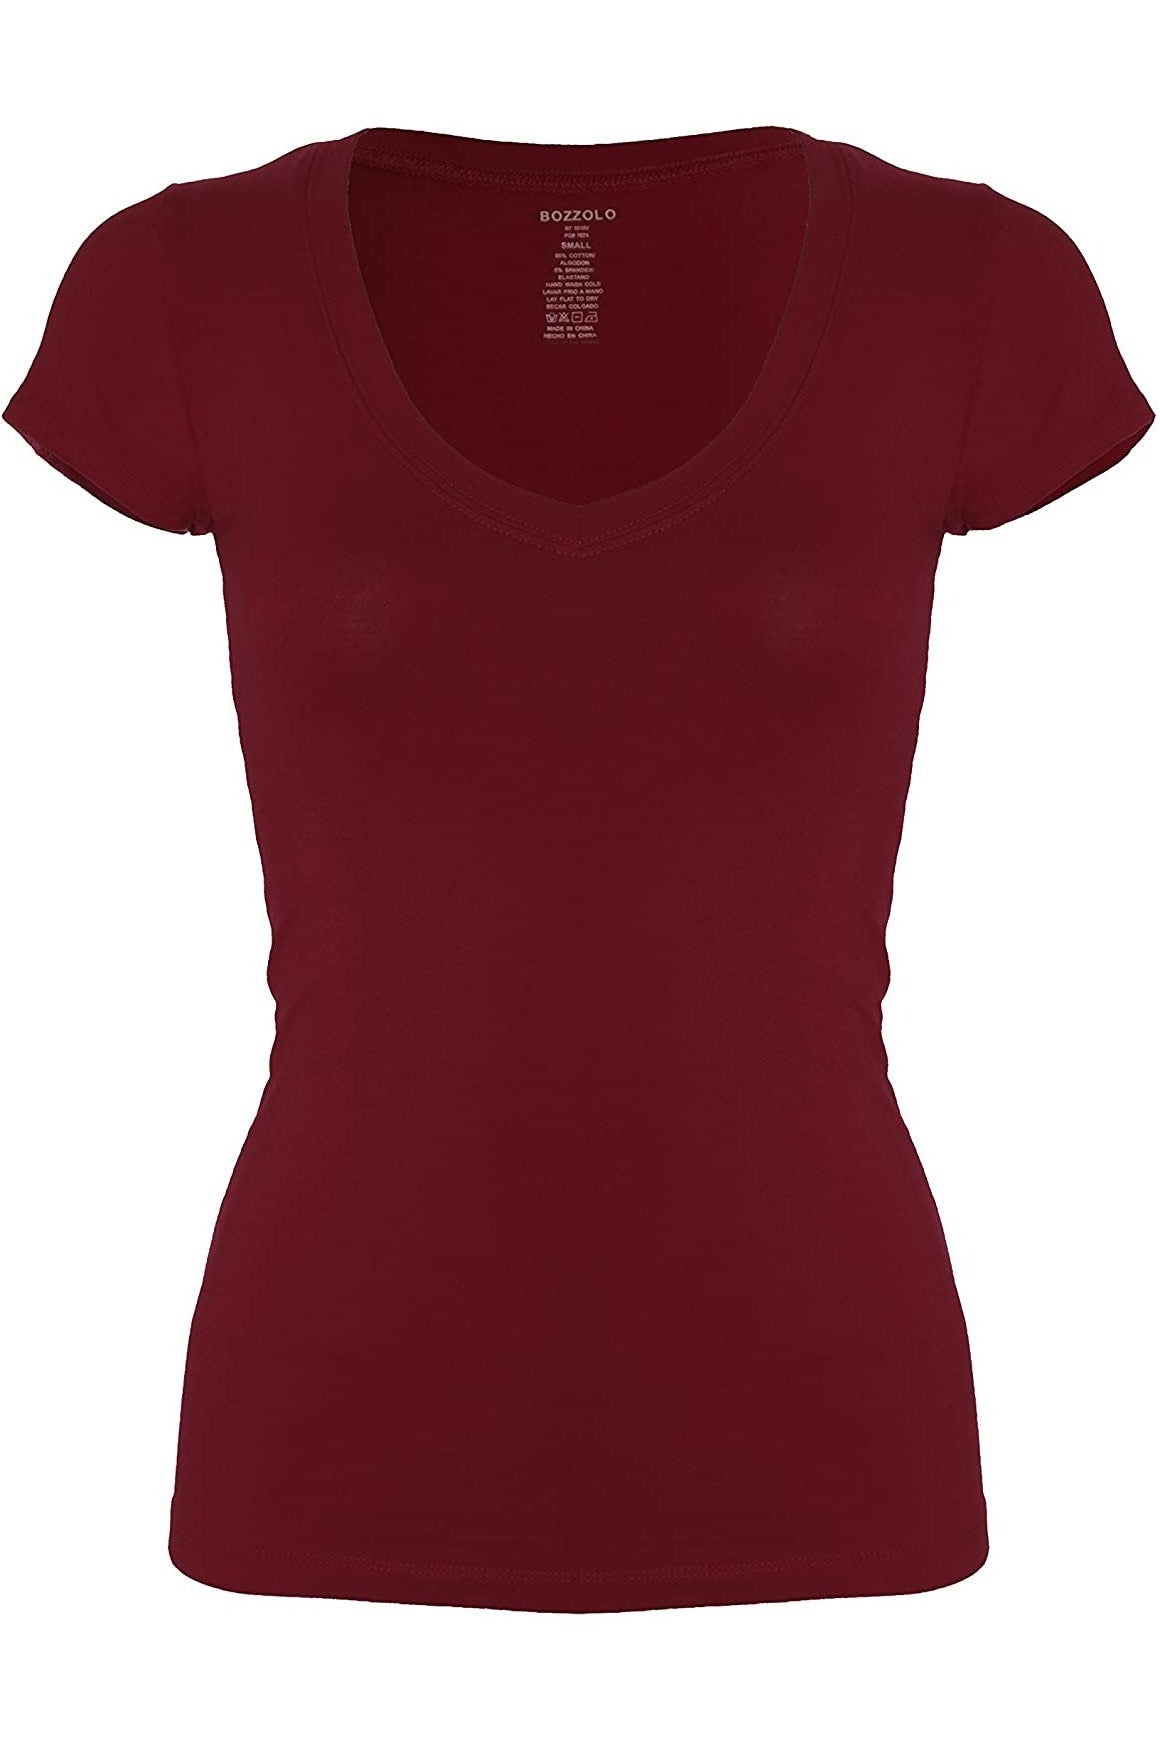 Ambiance Apparel Womens Red Crop Top Short Sleeve Size Medium AQ 